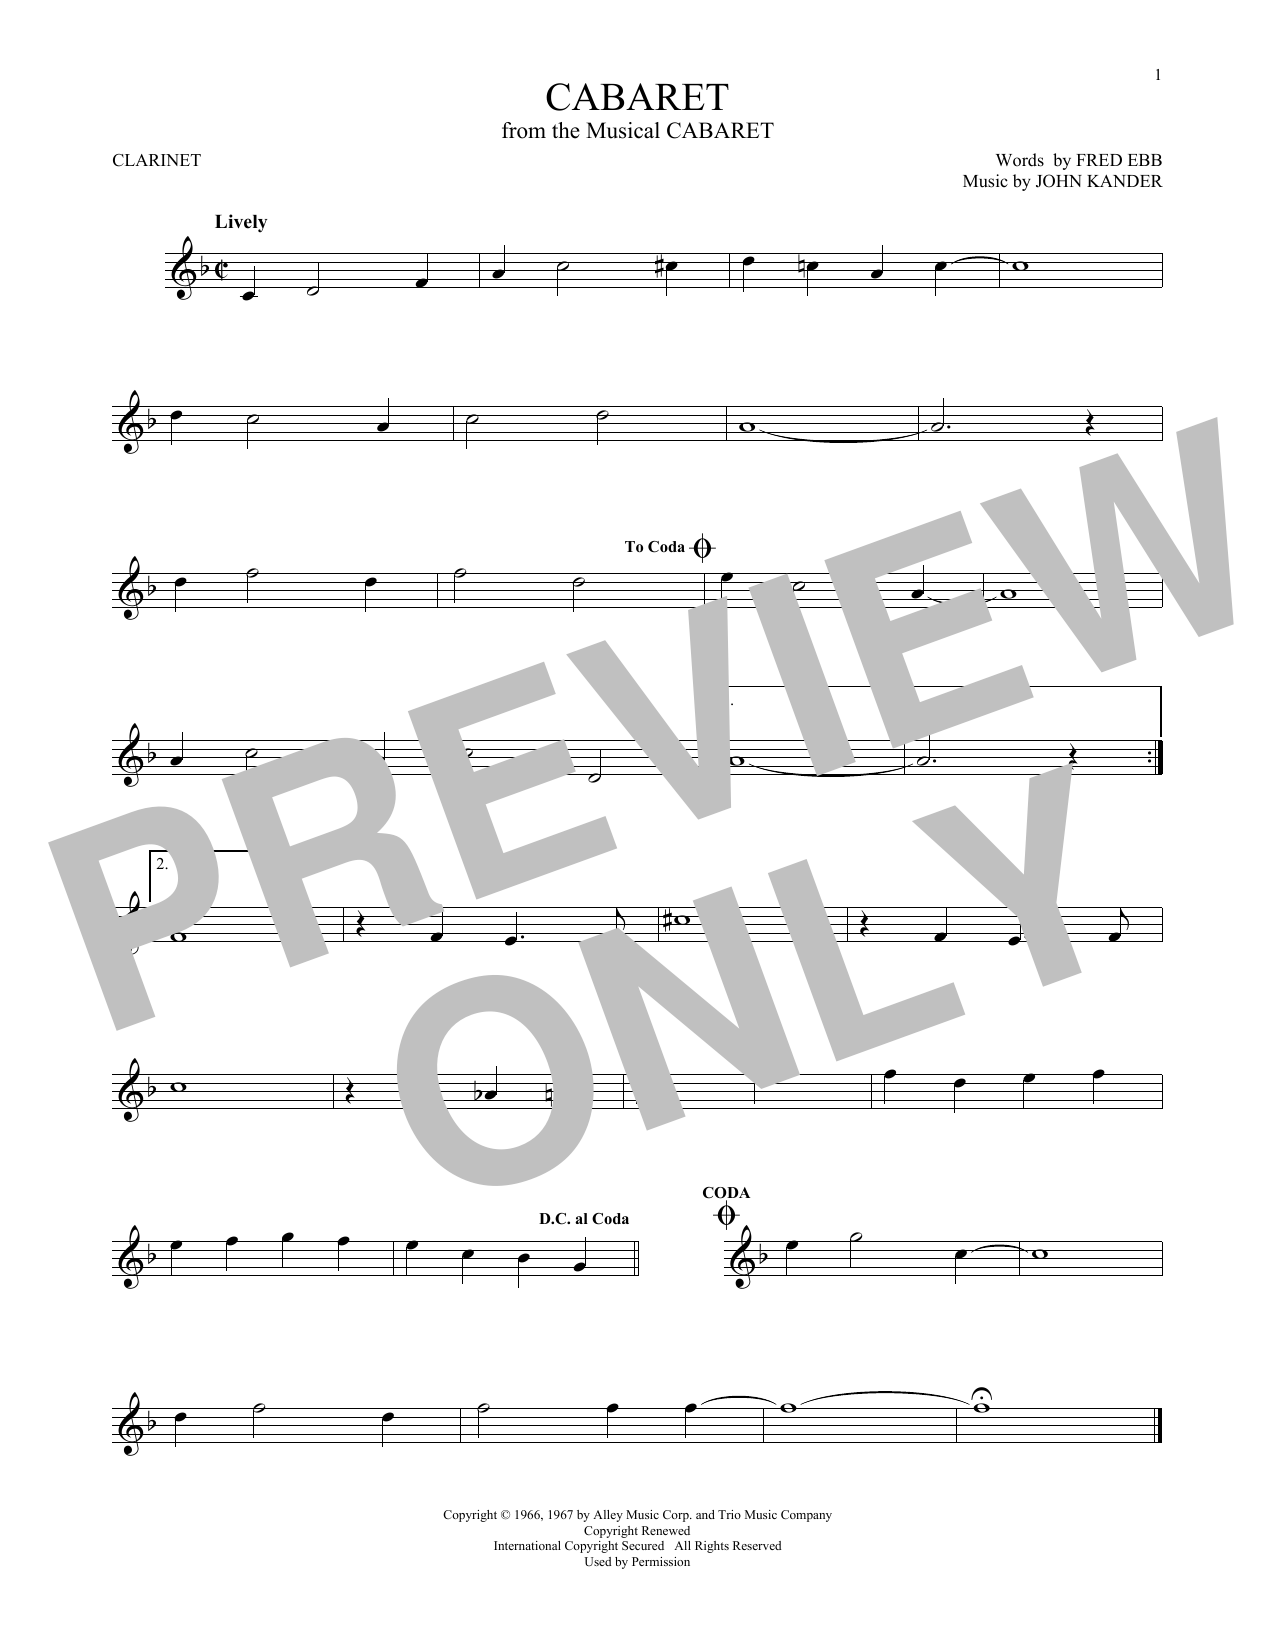 John Kander & Fred Ebb Cabaret Sheet Music Notes & Chords for Alto Saxophone - Download or Print PDF